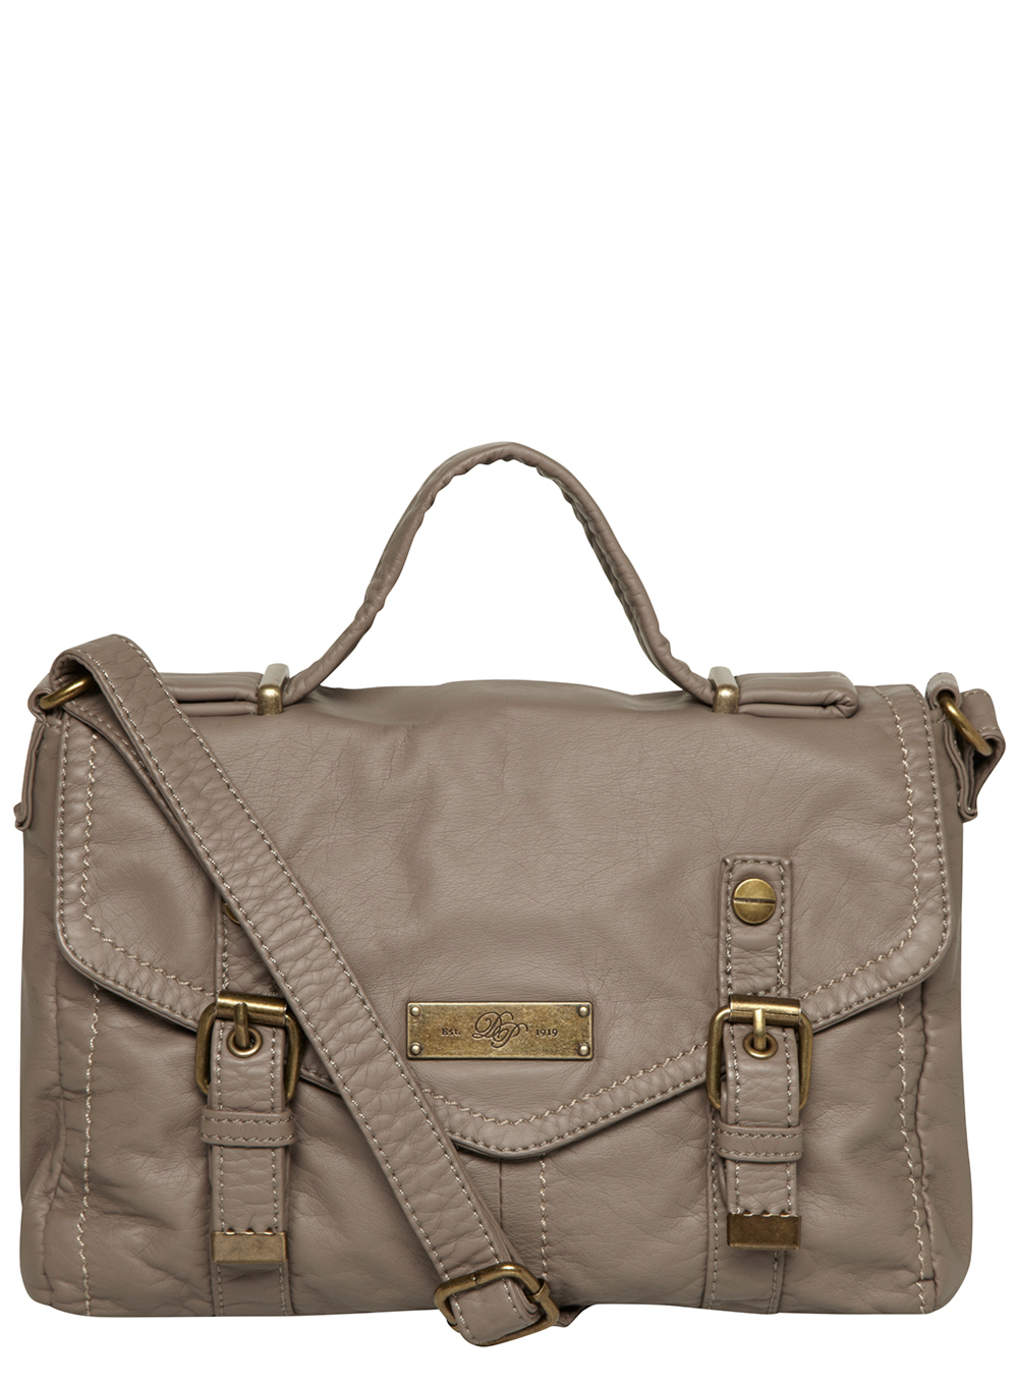 Dorothy Perkins Grey satchel bag 18347402